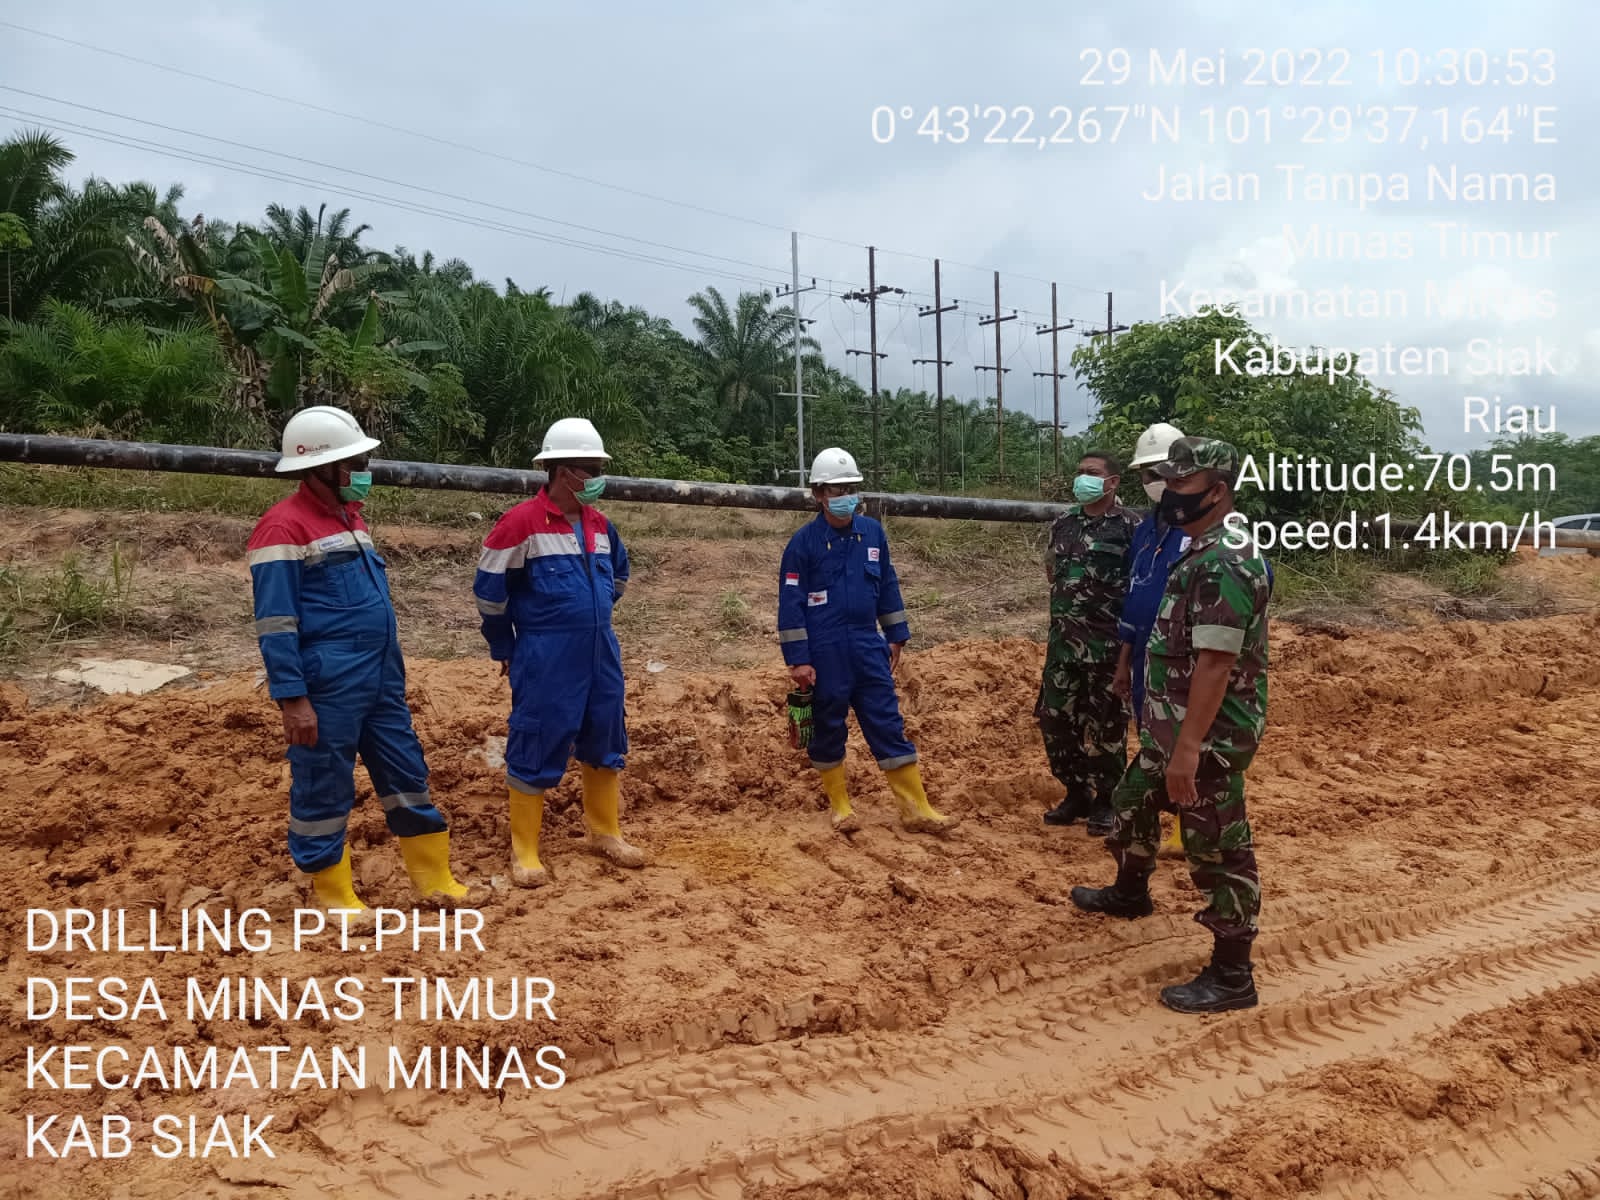 Hari Ini Sertu Susiawan & Sertu Ardhi Syam Lakukan Patroli Drilling di PT PHR Minas